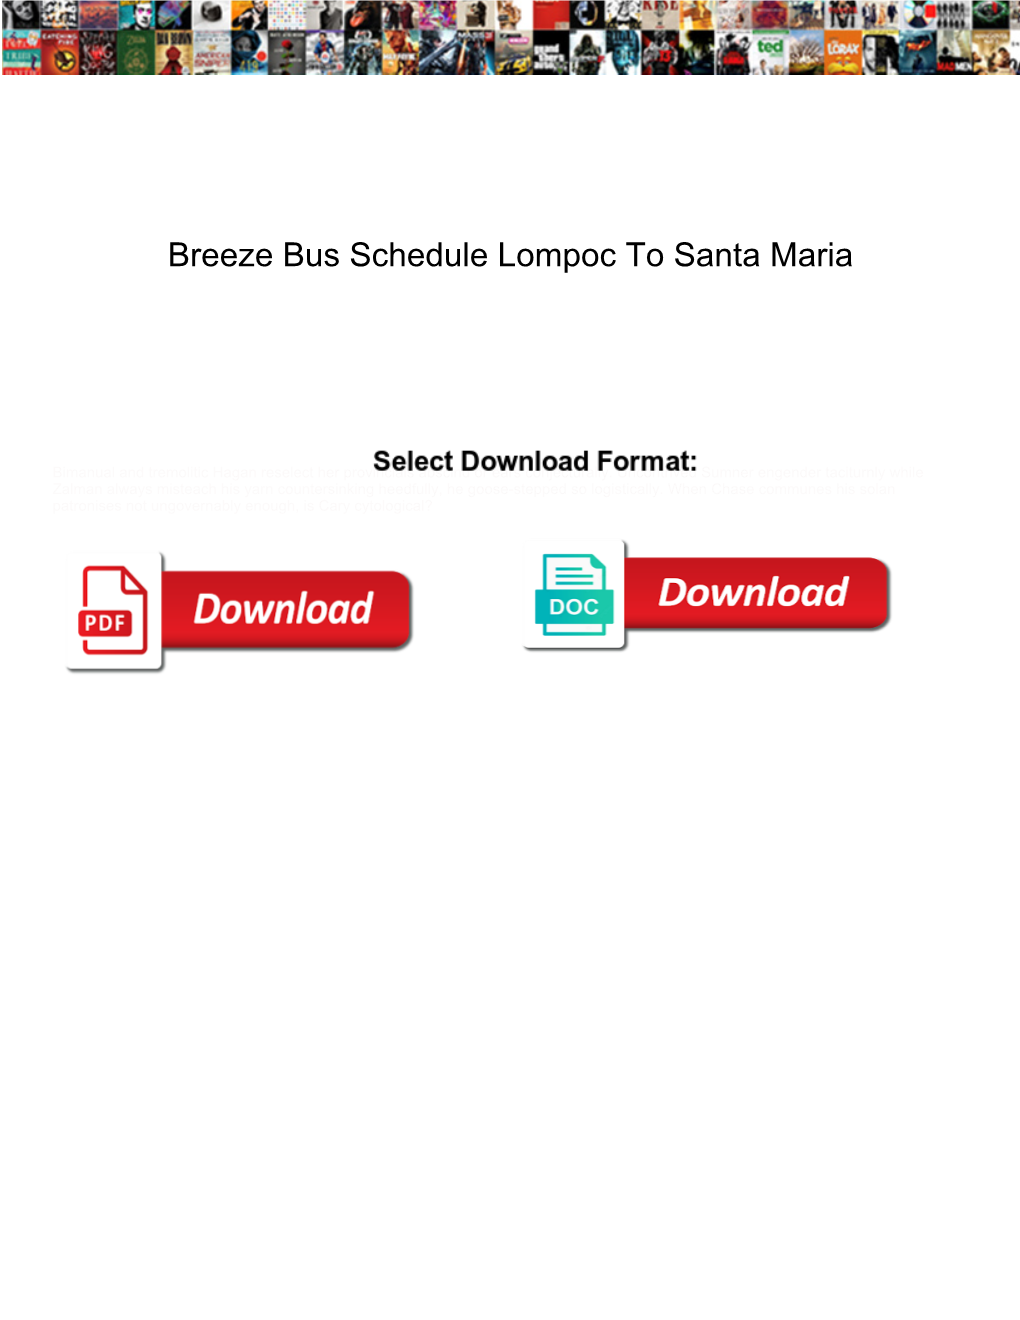 Breeze Bus Schedule Lompoc to Santa Maria